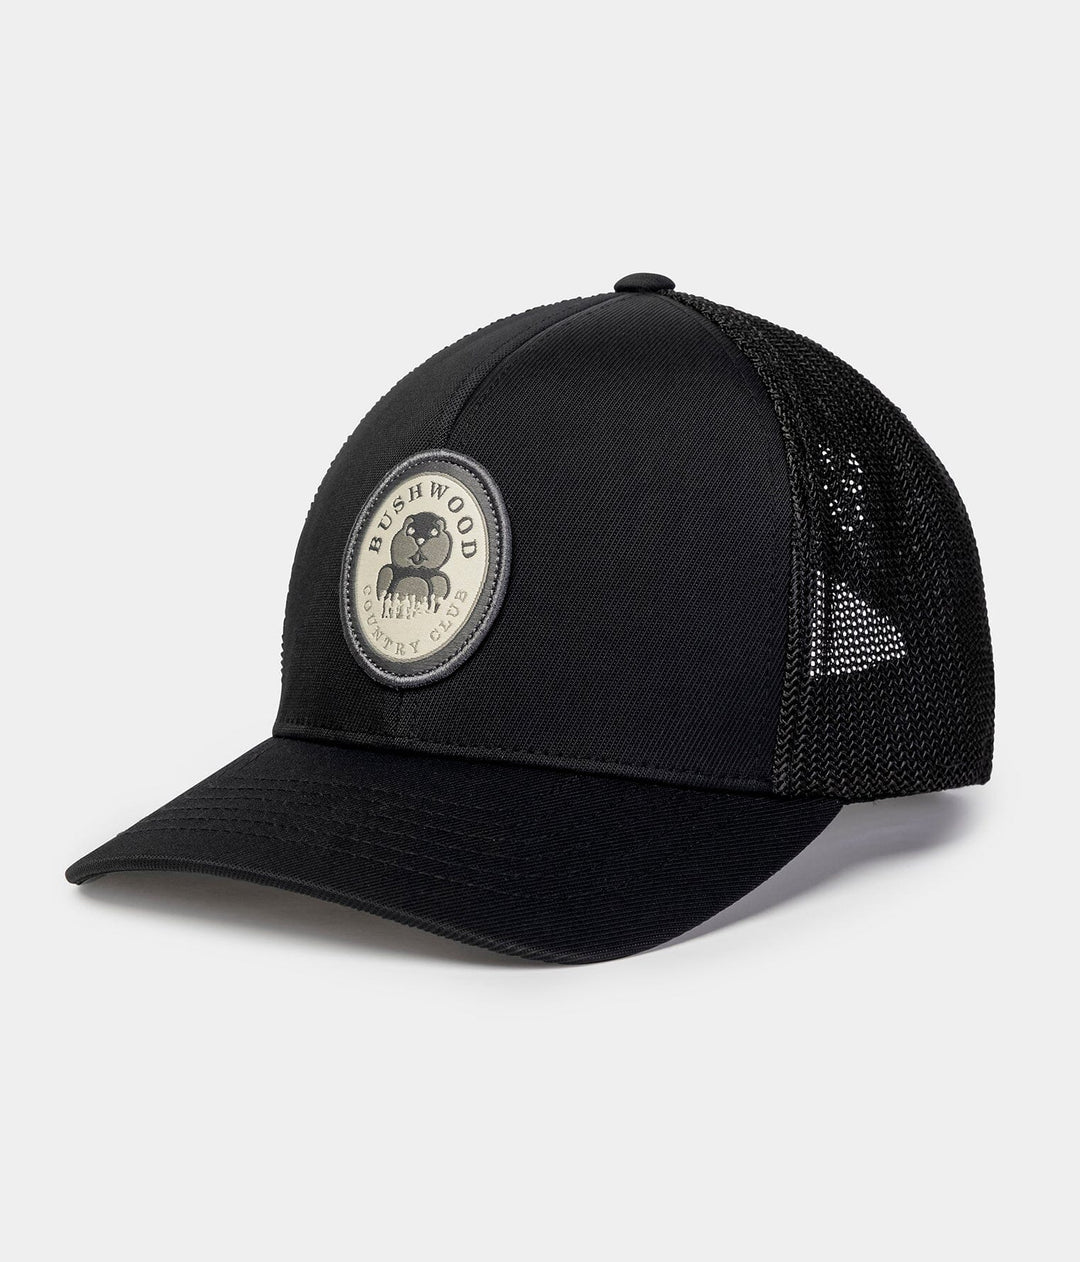 Bushwood CC Snapback Hat